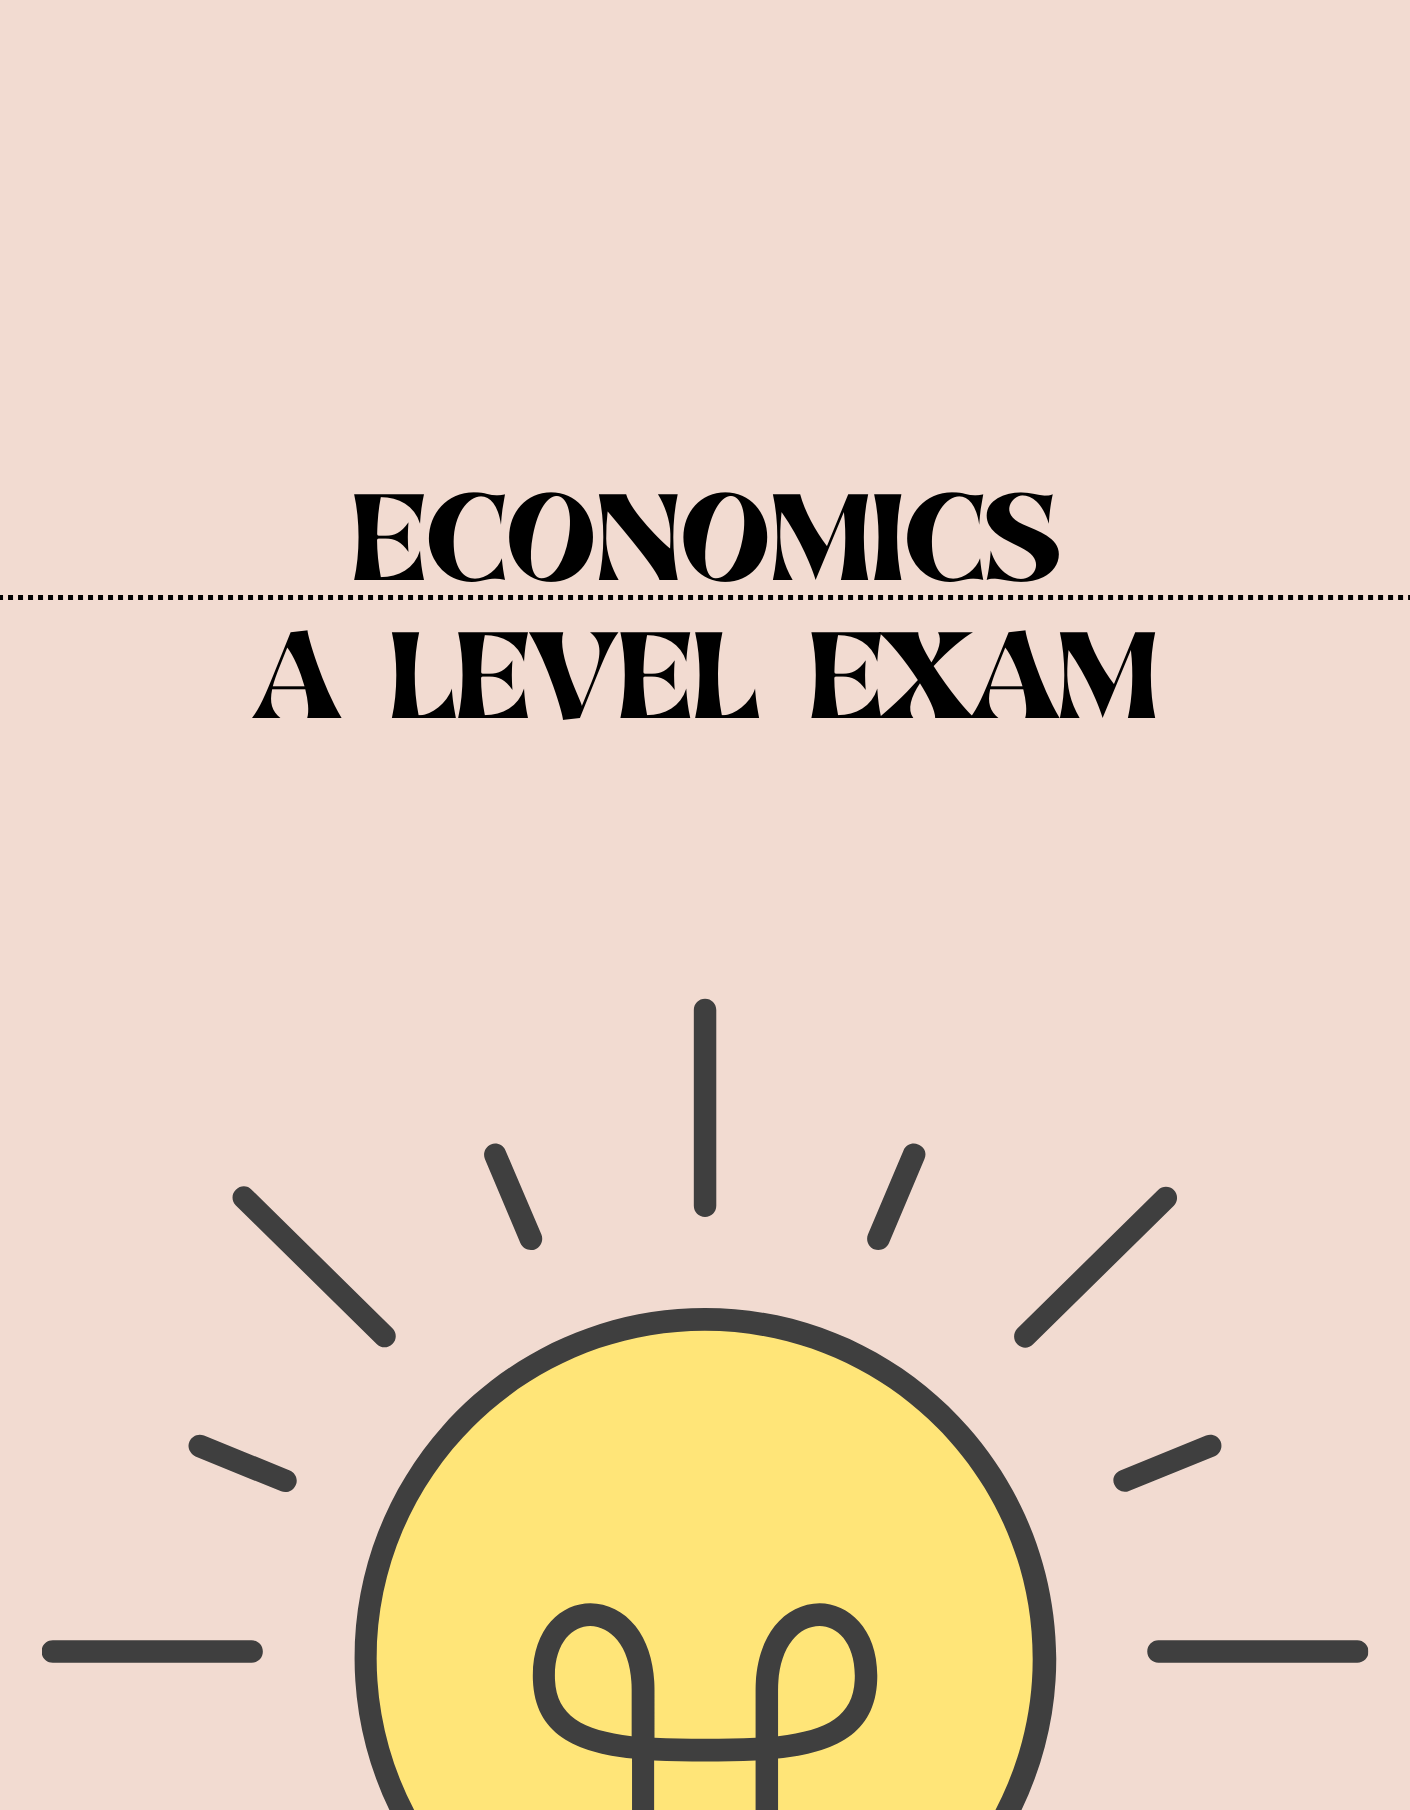 A Level - Economics Exam - Exam Centre Birmingham Limited